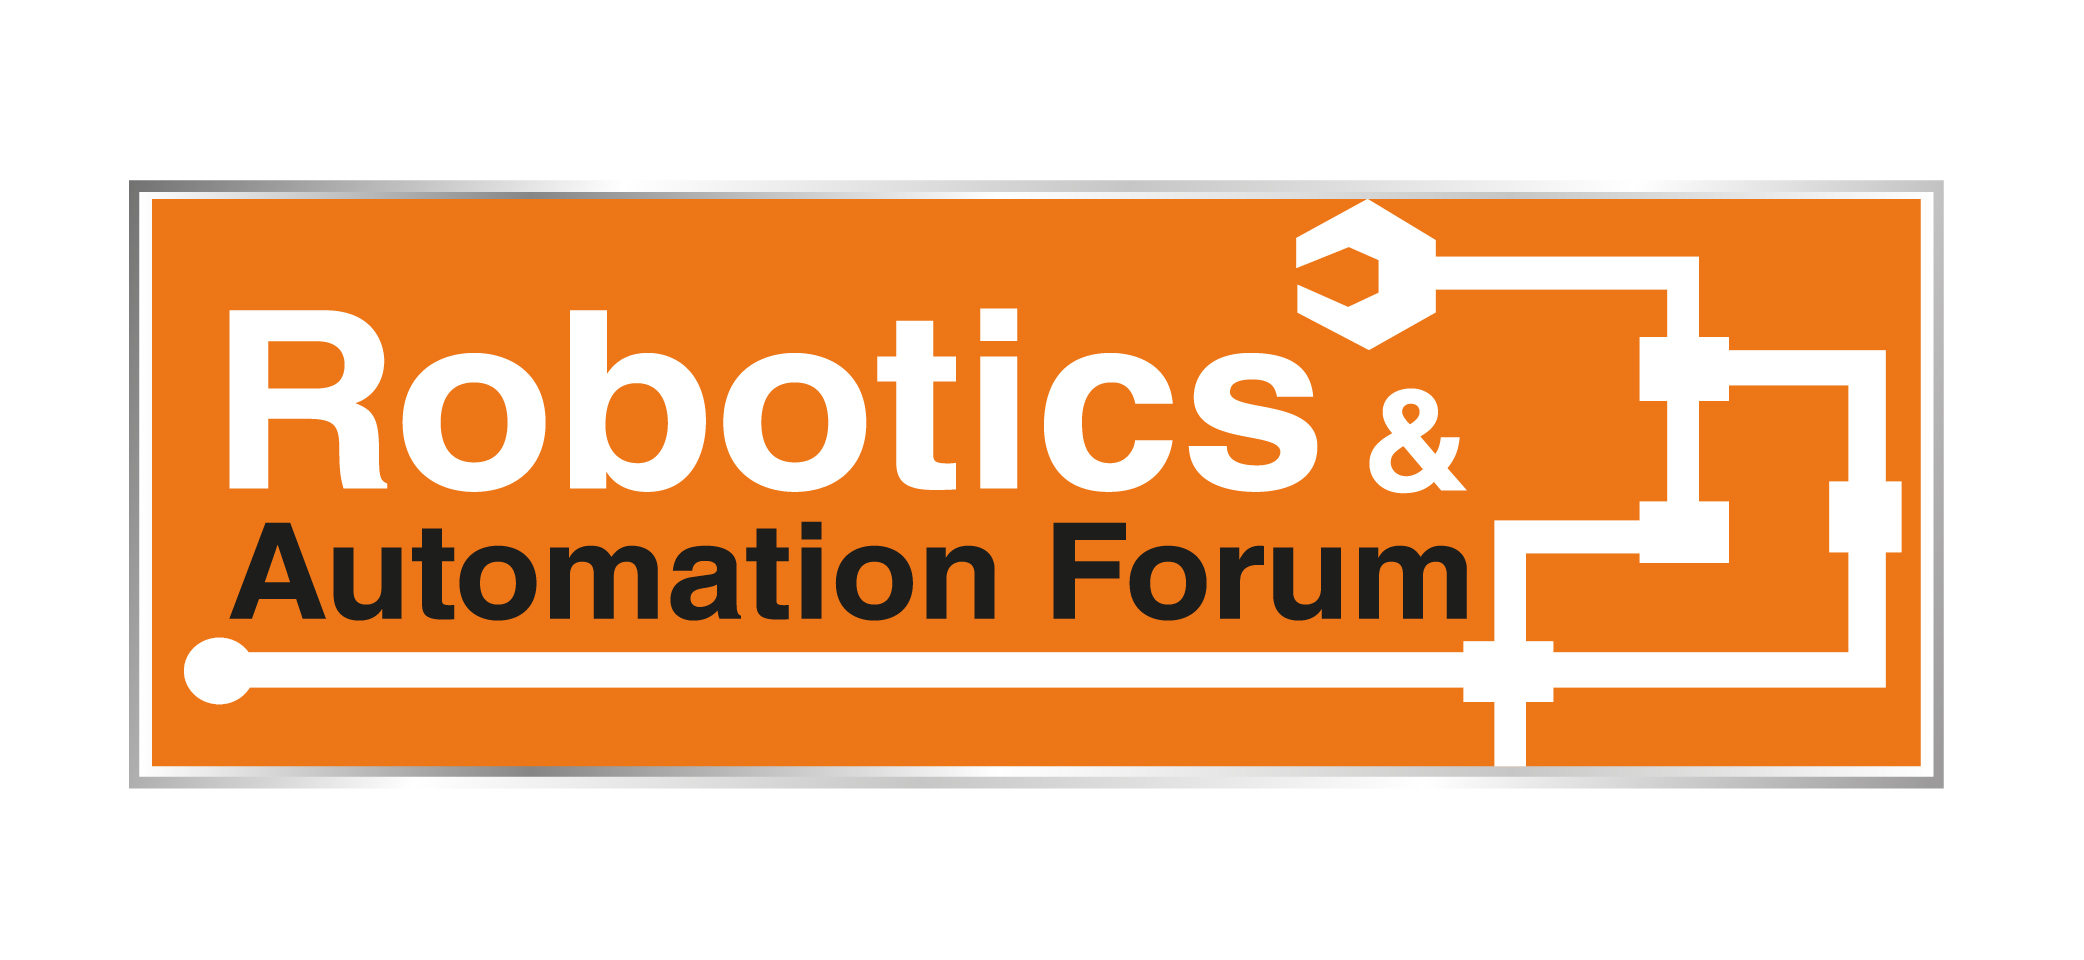 Robotics & Automation Forum